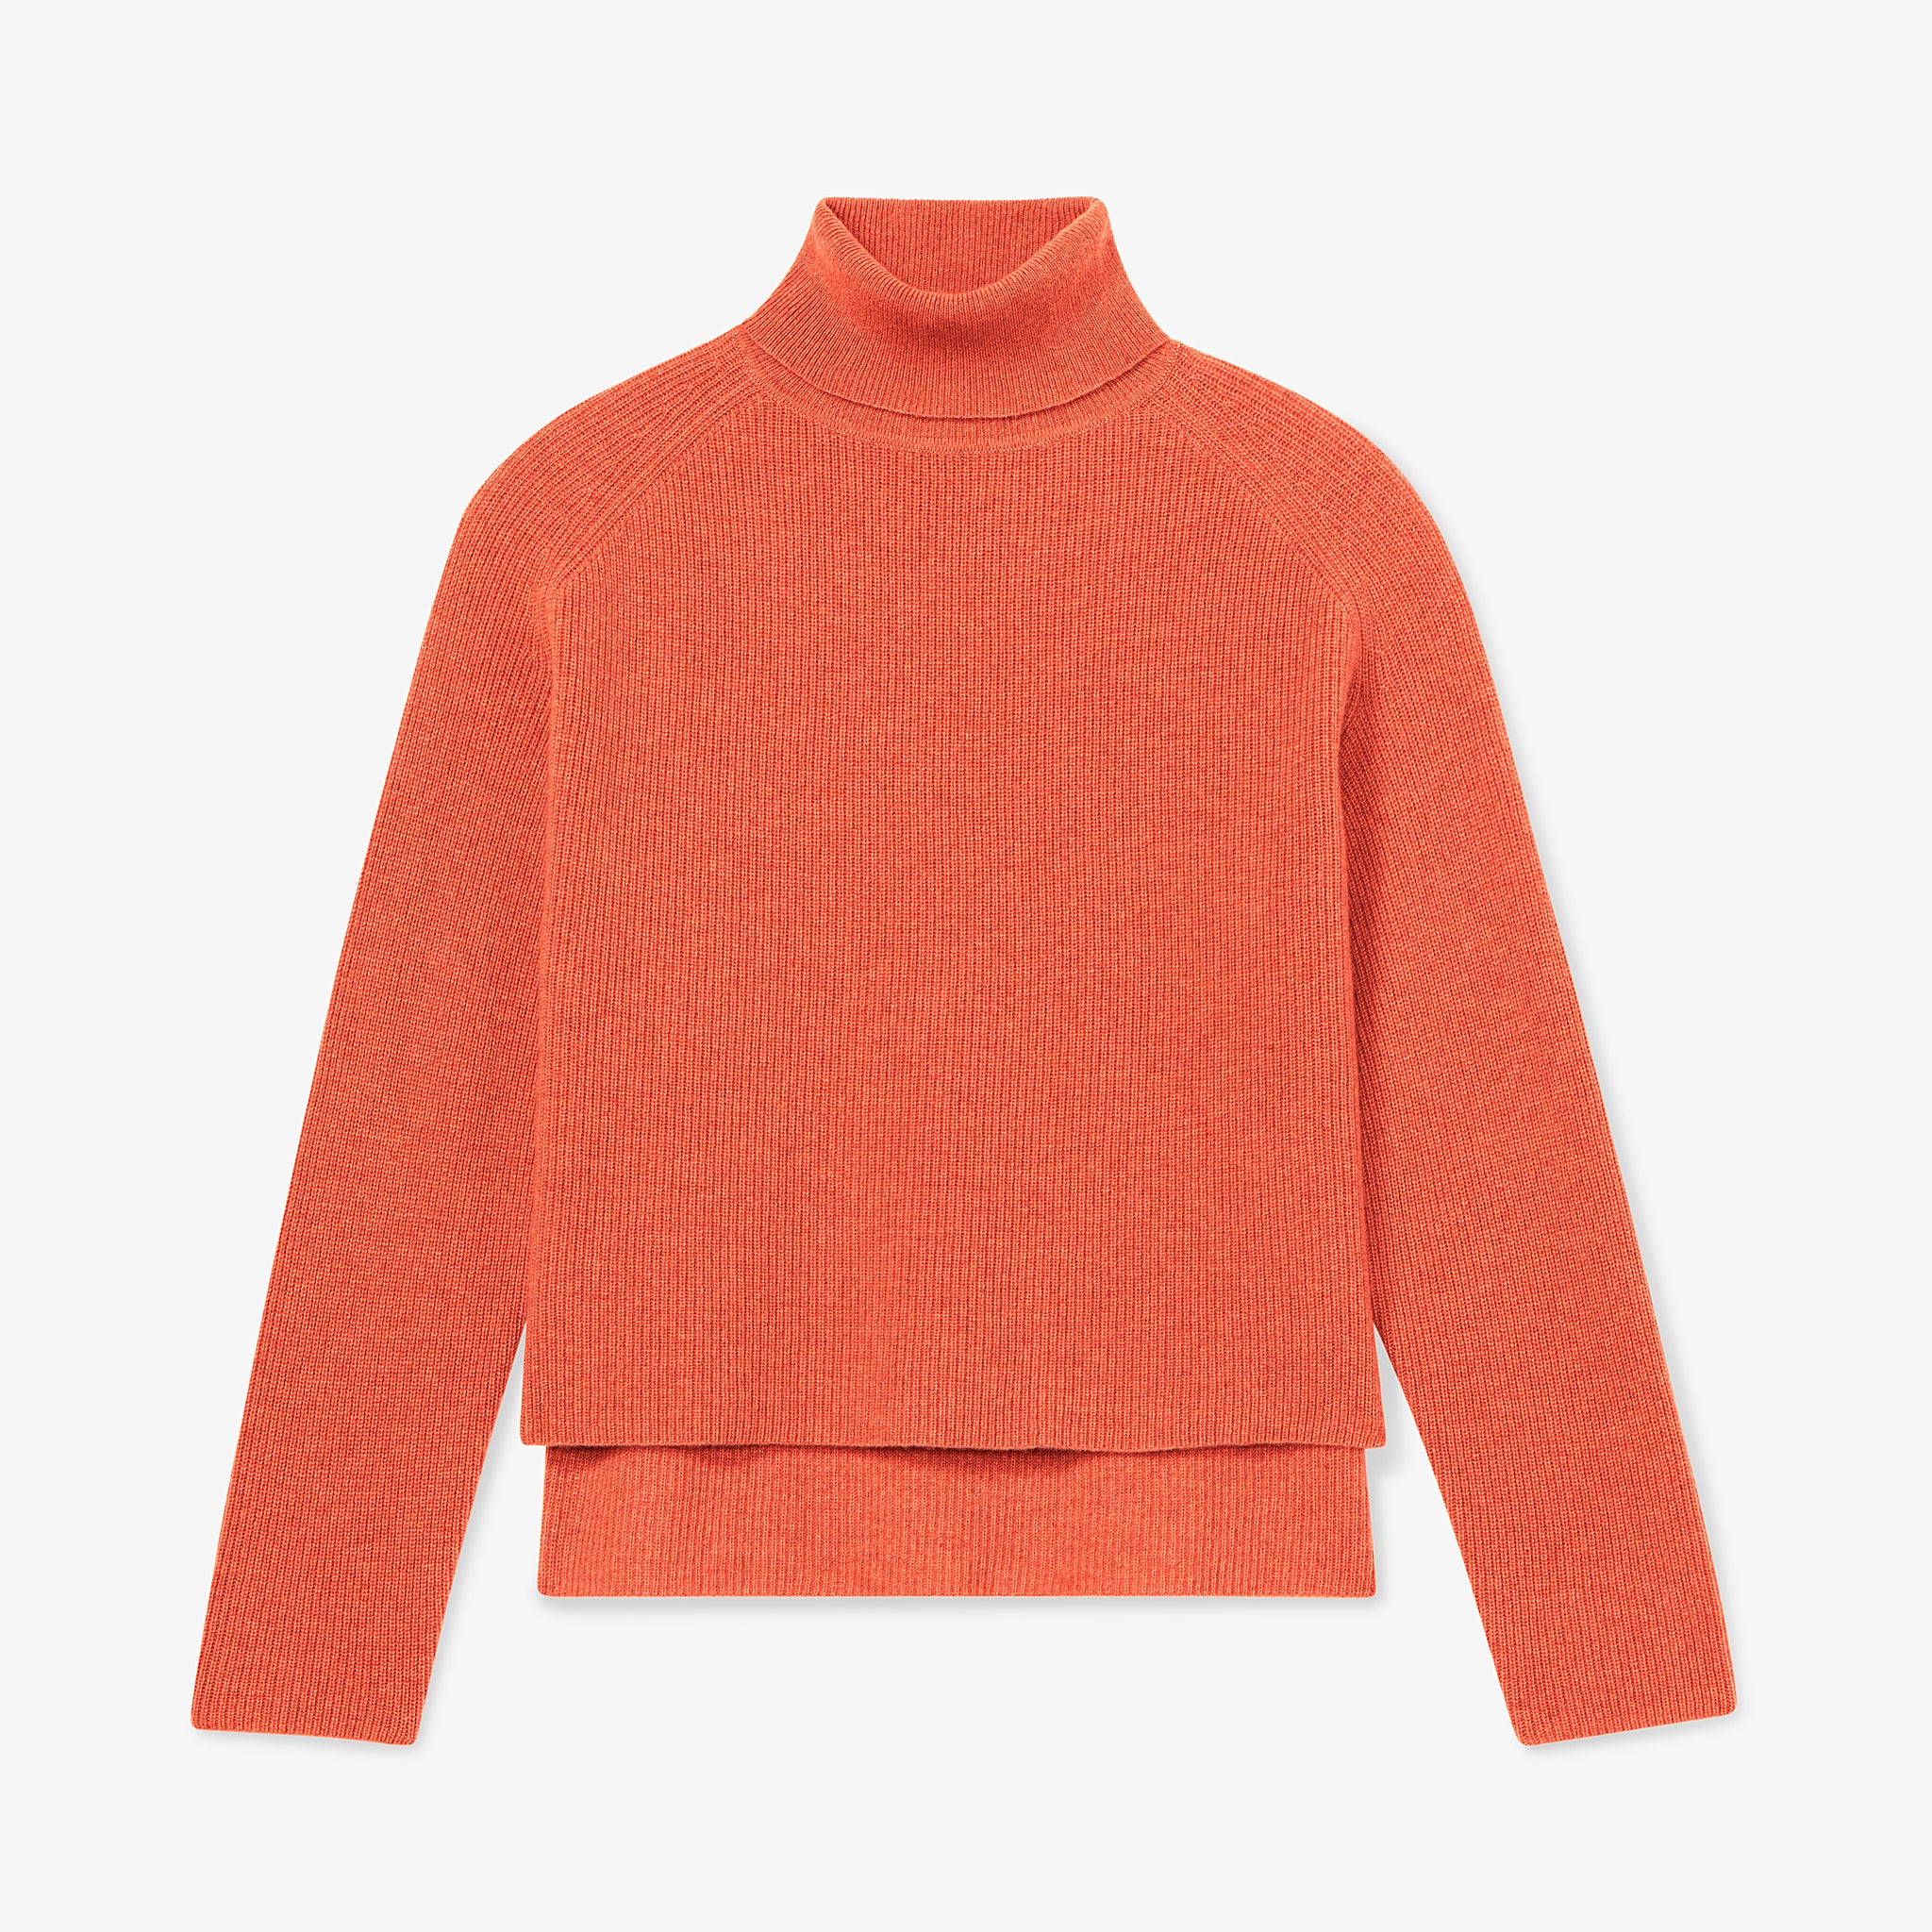 Packshot image of the Arbus Sweater in Papaya